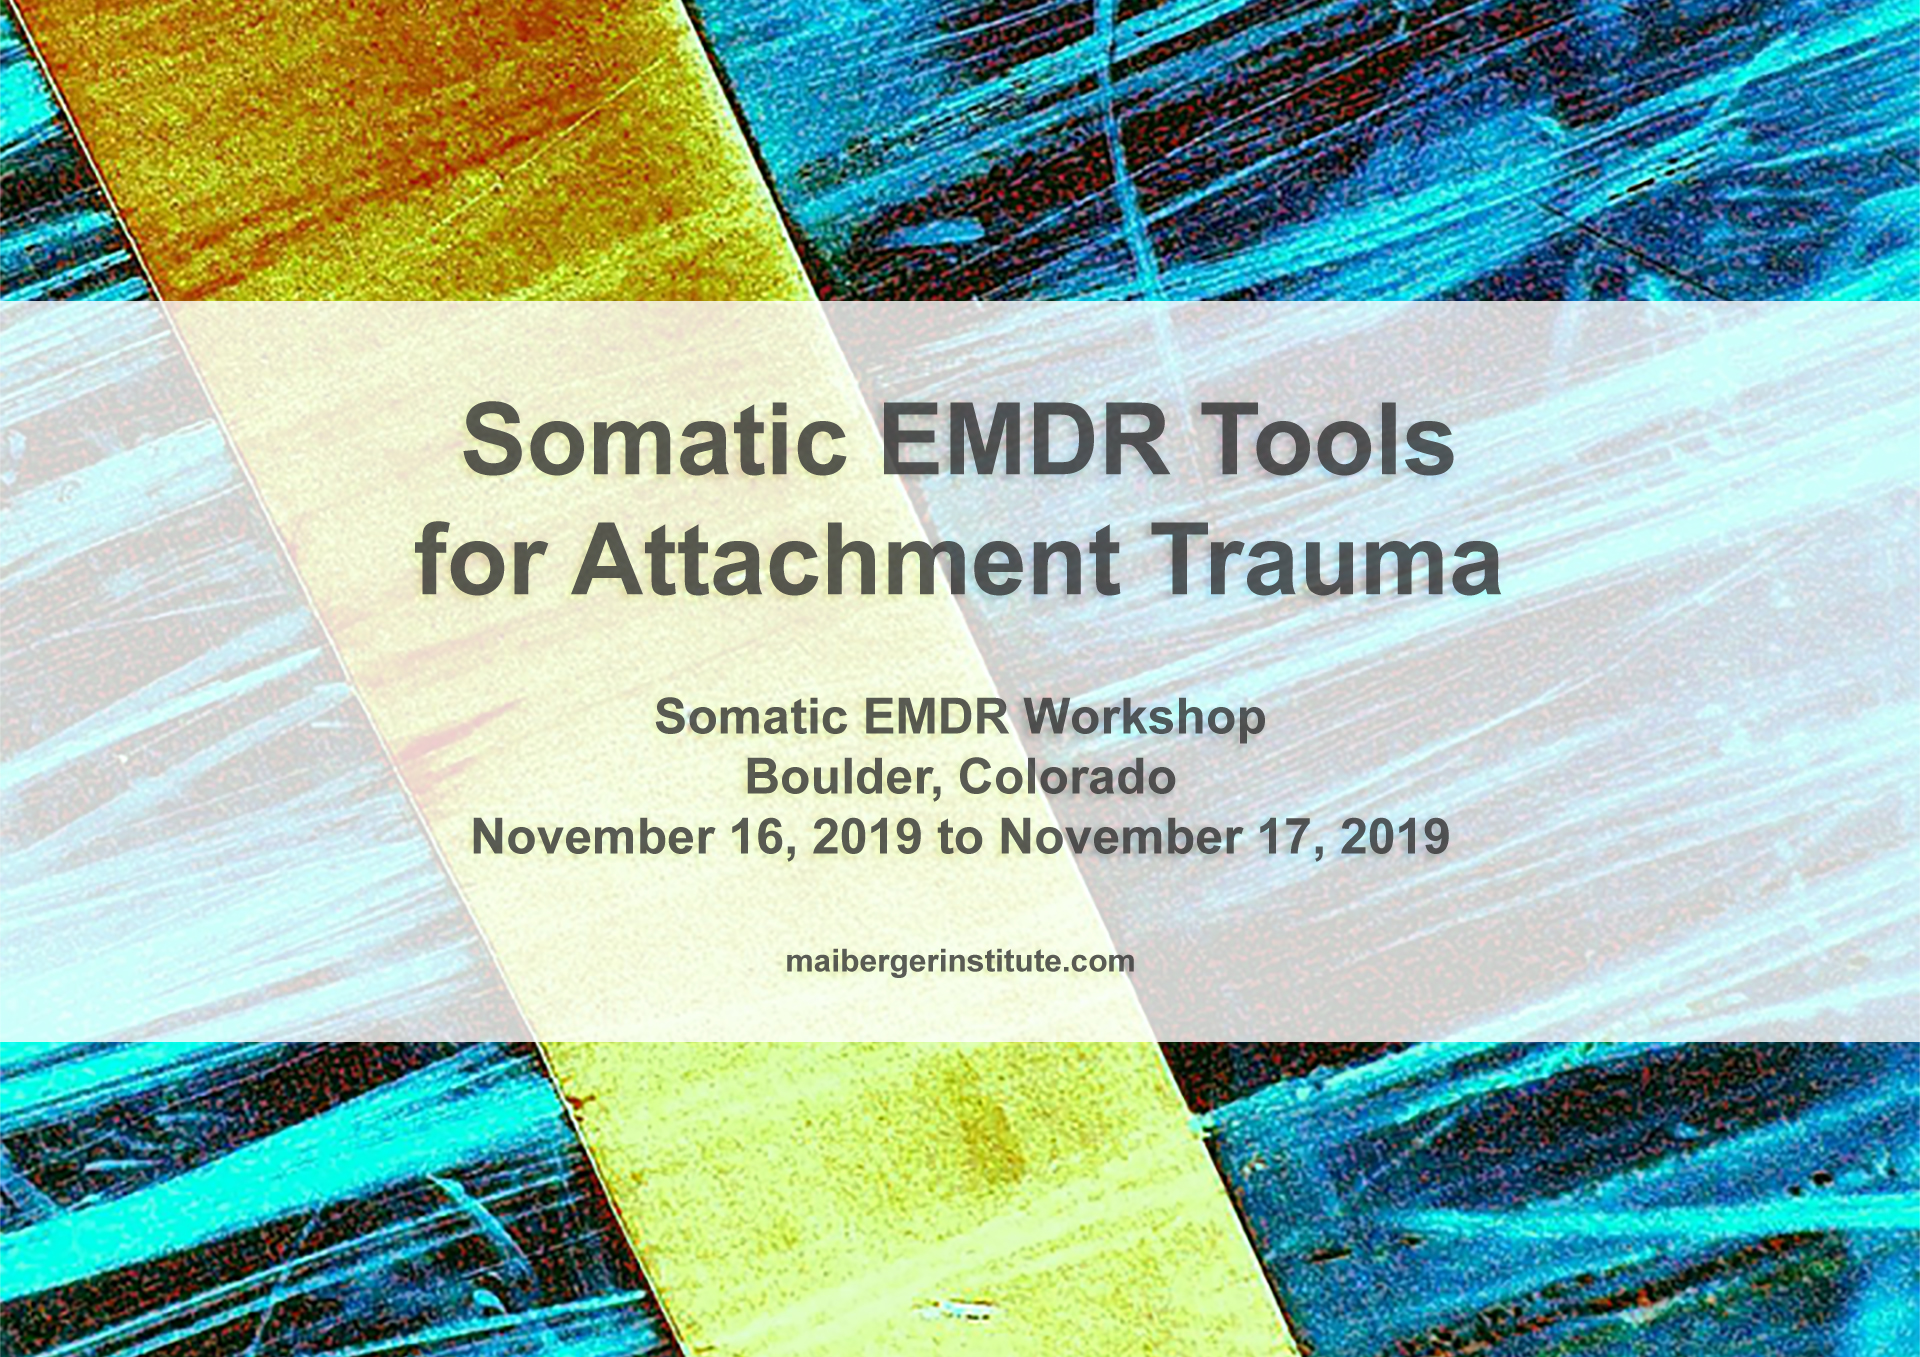 Somatic EMDR Tools for Attachment Trauma - Somatic EMDR Workshop in Boulder, Colorado - November 16-17, 2019